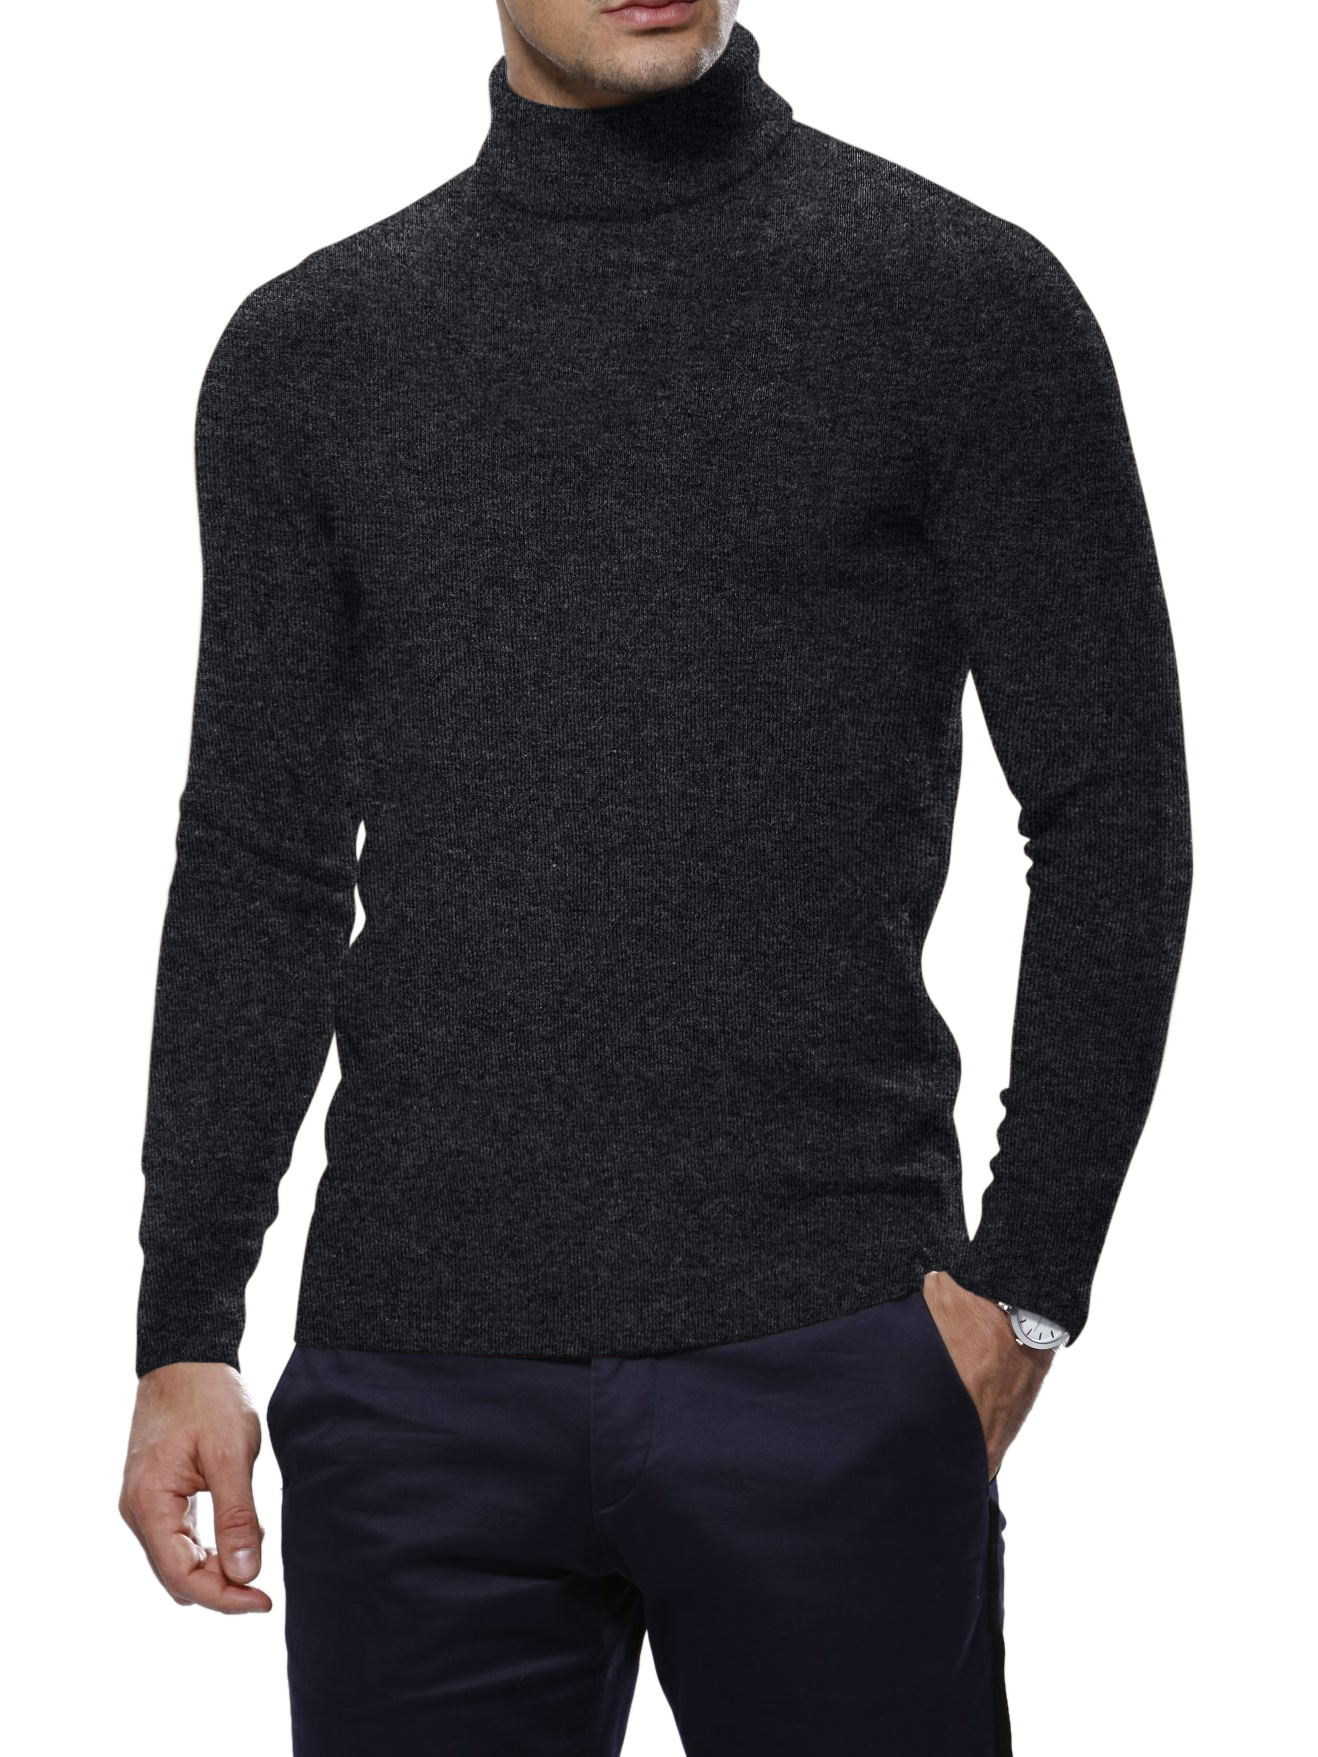 Charcoal Merino Wool Turtle Neck Sweater